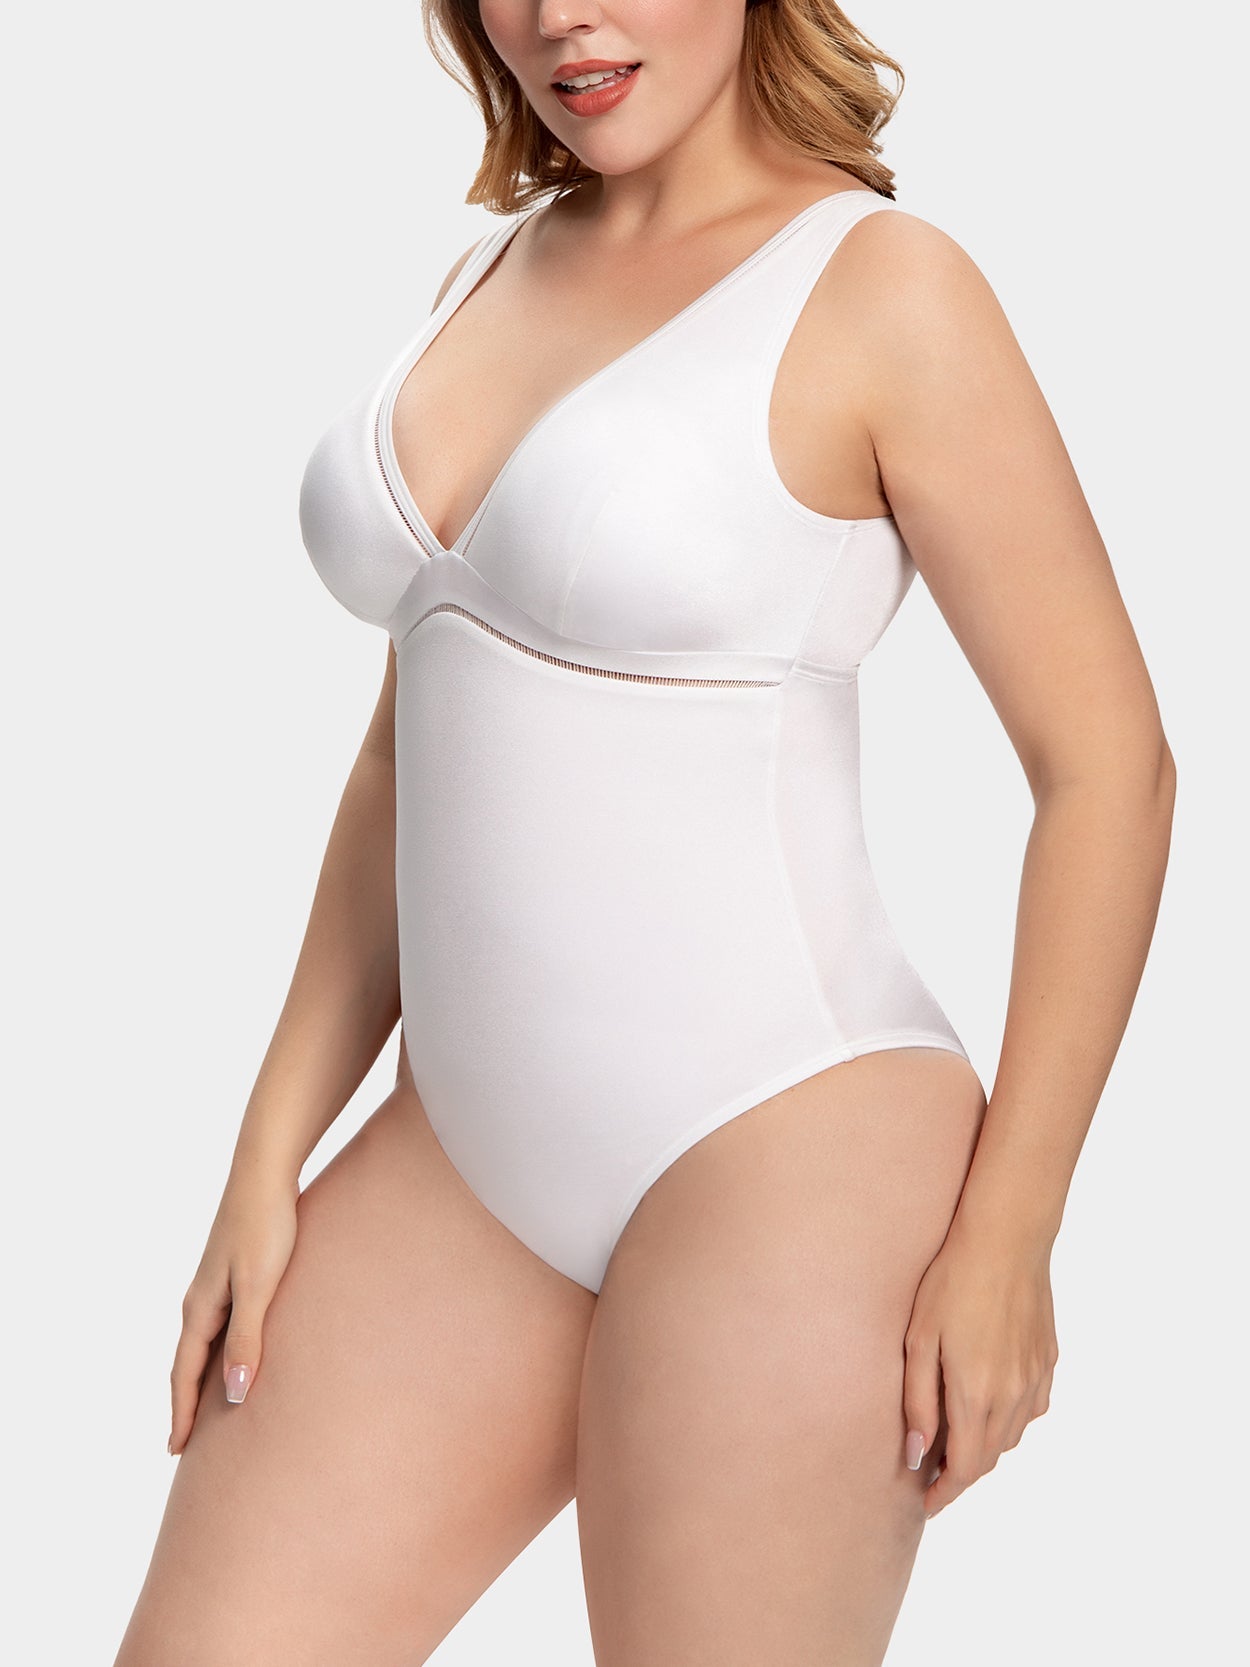 Women Summer Swimming Costume One-piece Swimwear Padded Bikini Swimsuit  Bathing Suit Beachwear Plus Size